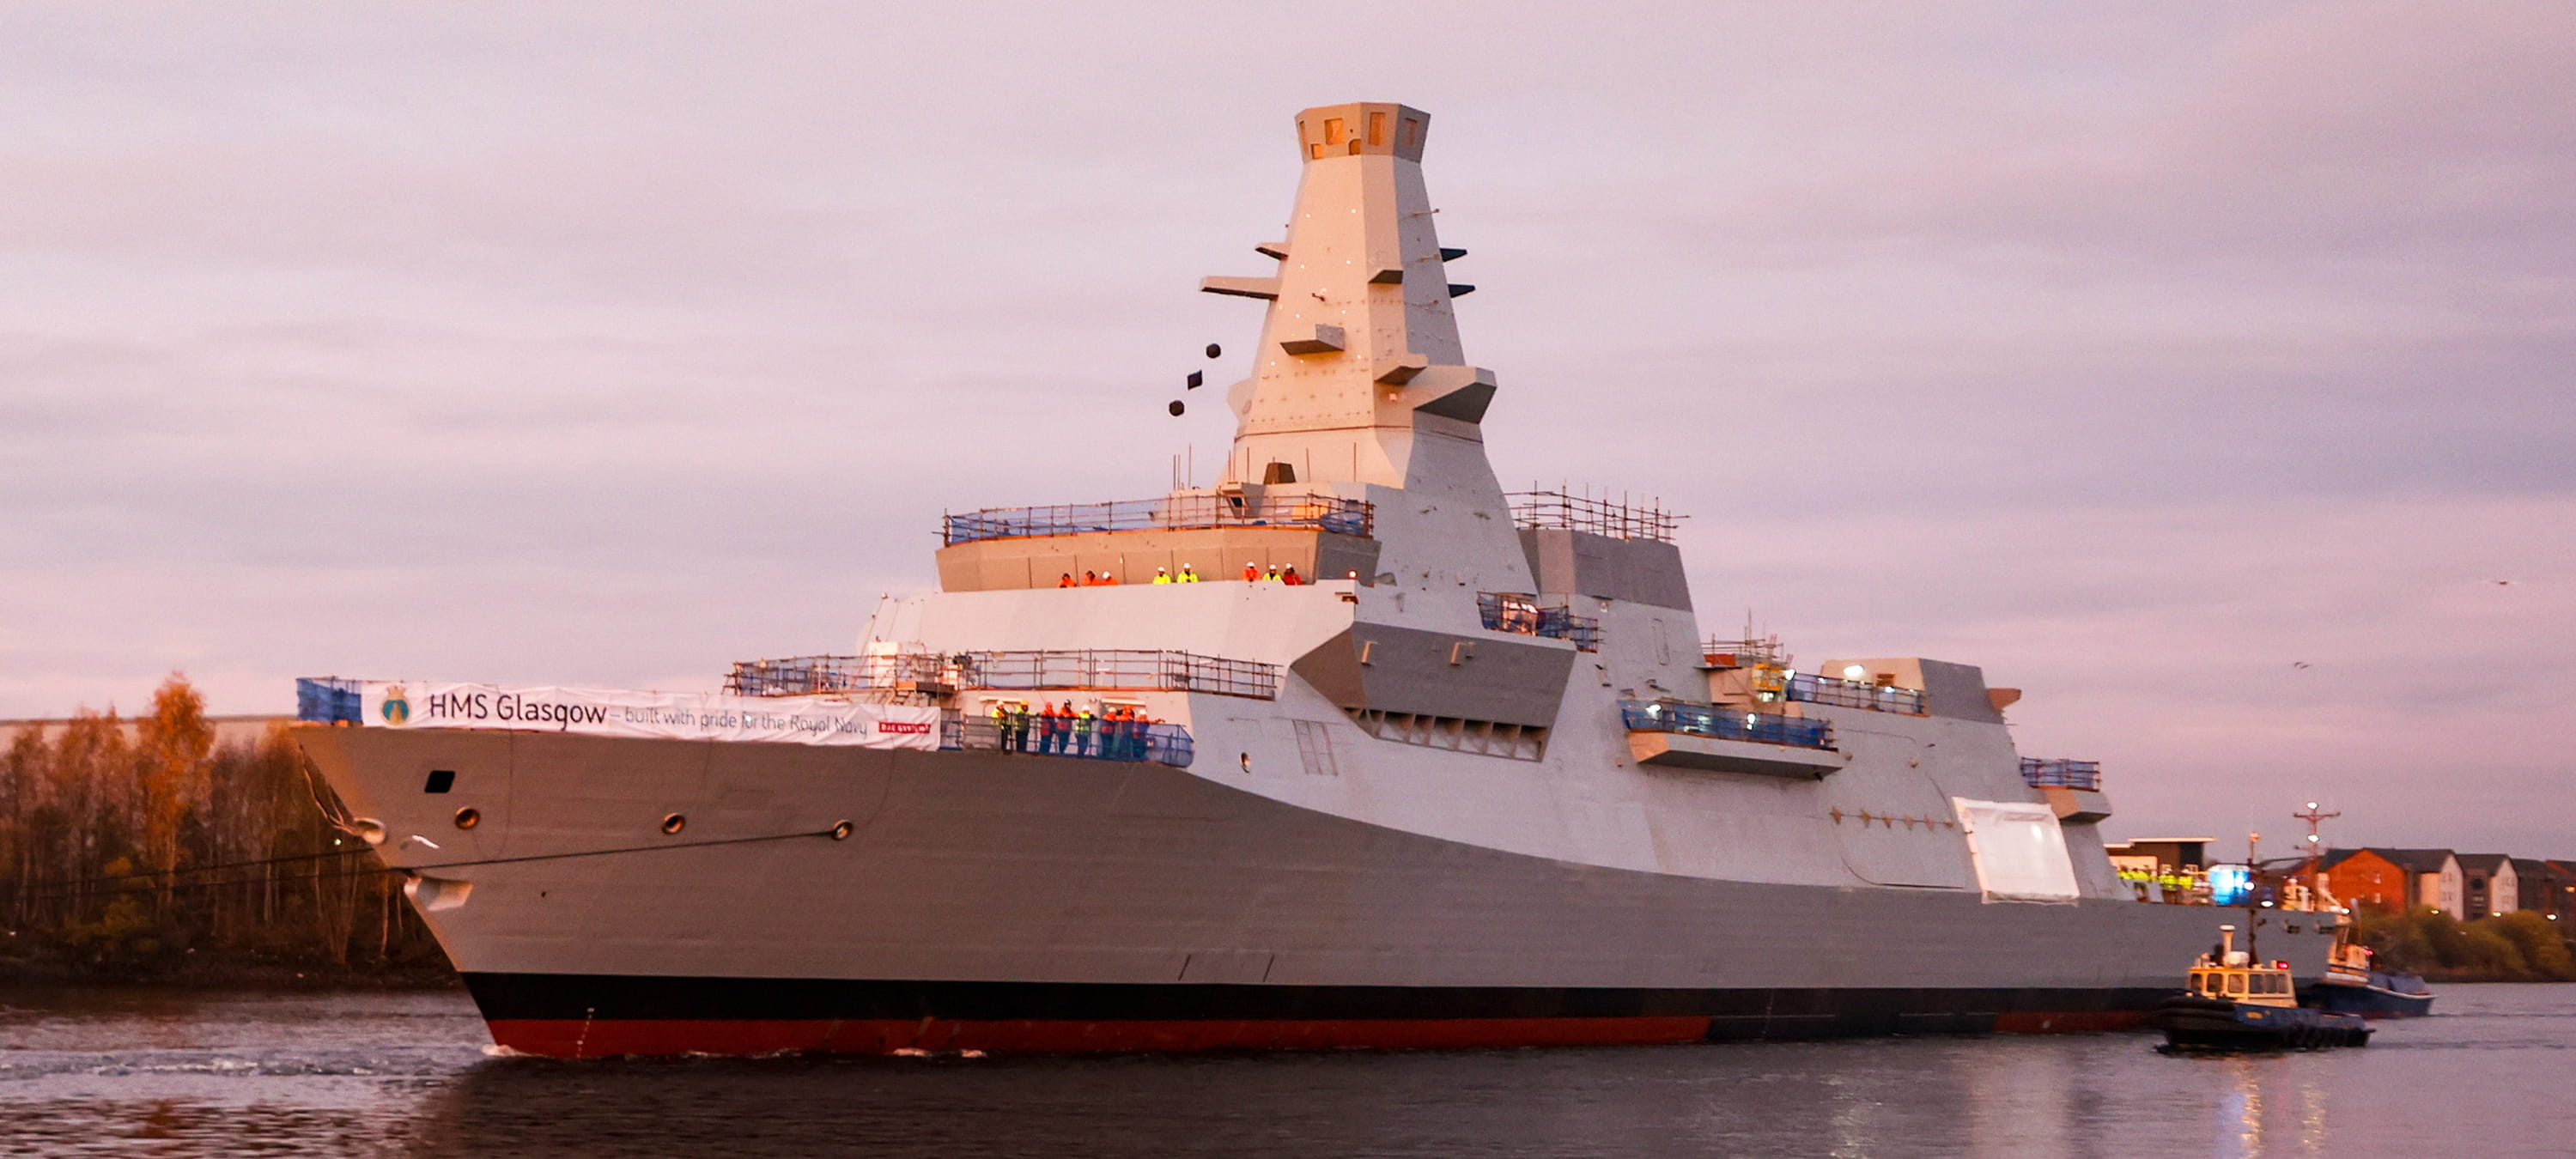 Royal Navy Ship HMS Glasgow makes its way to Scotstoun shipyard